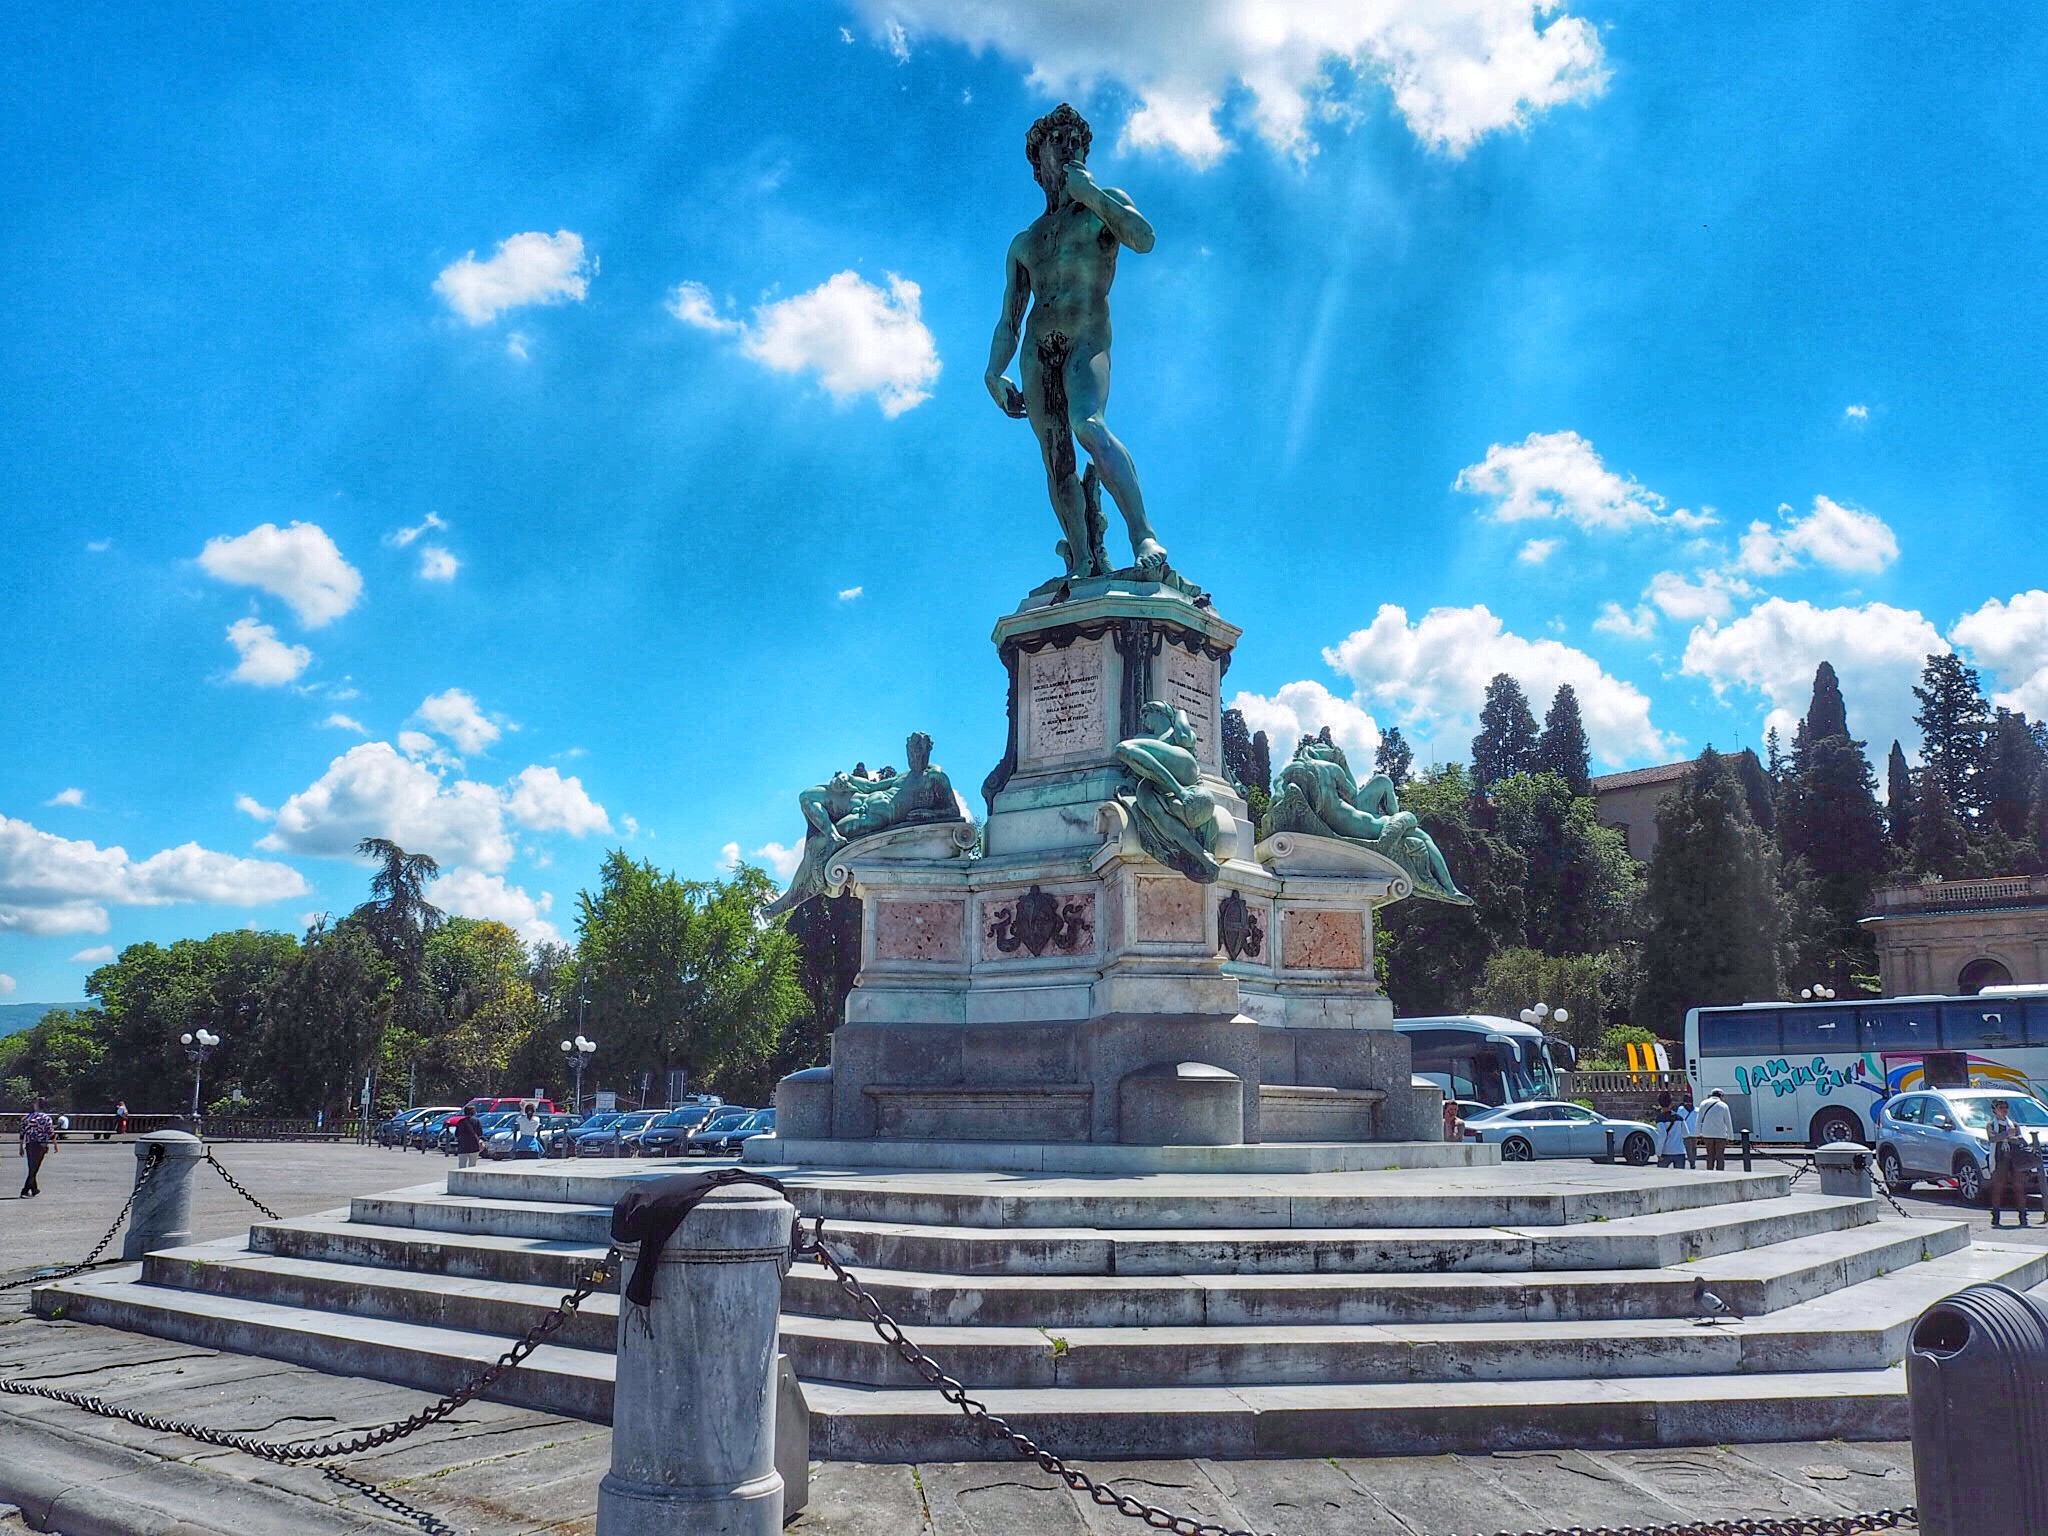 Piazzale Michelangelo statue - Enjoy the adventure